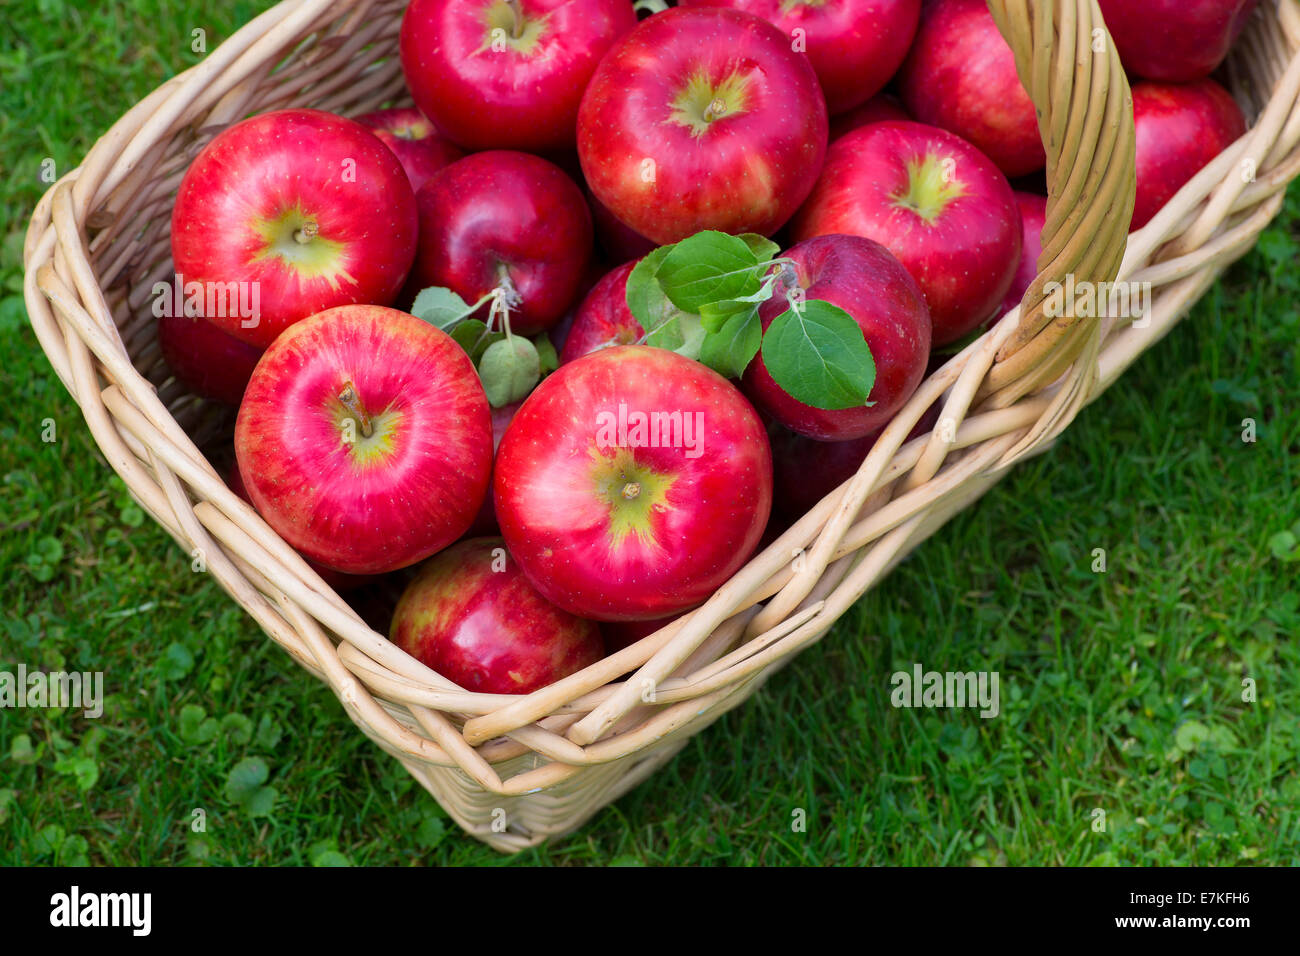 https://c8.alamy.com/comp/E7KFH6/wicker-basket-full-of-red-ripe-honeycrisp-apples-E7KFH6.jpg